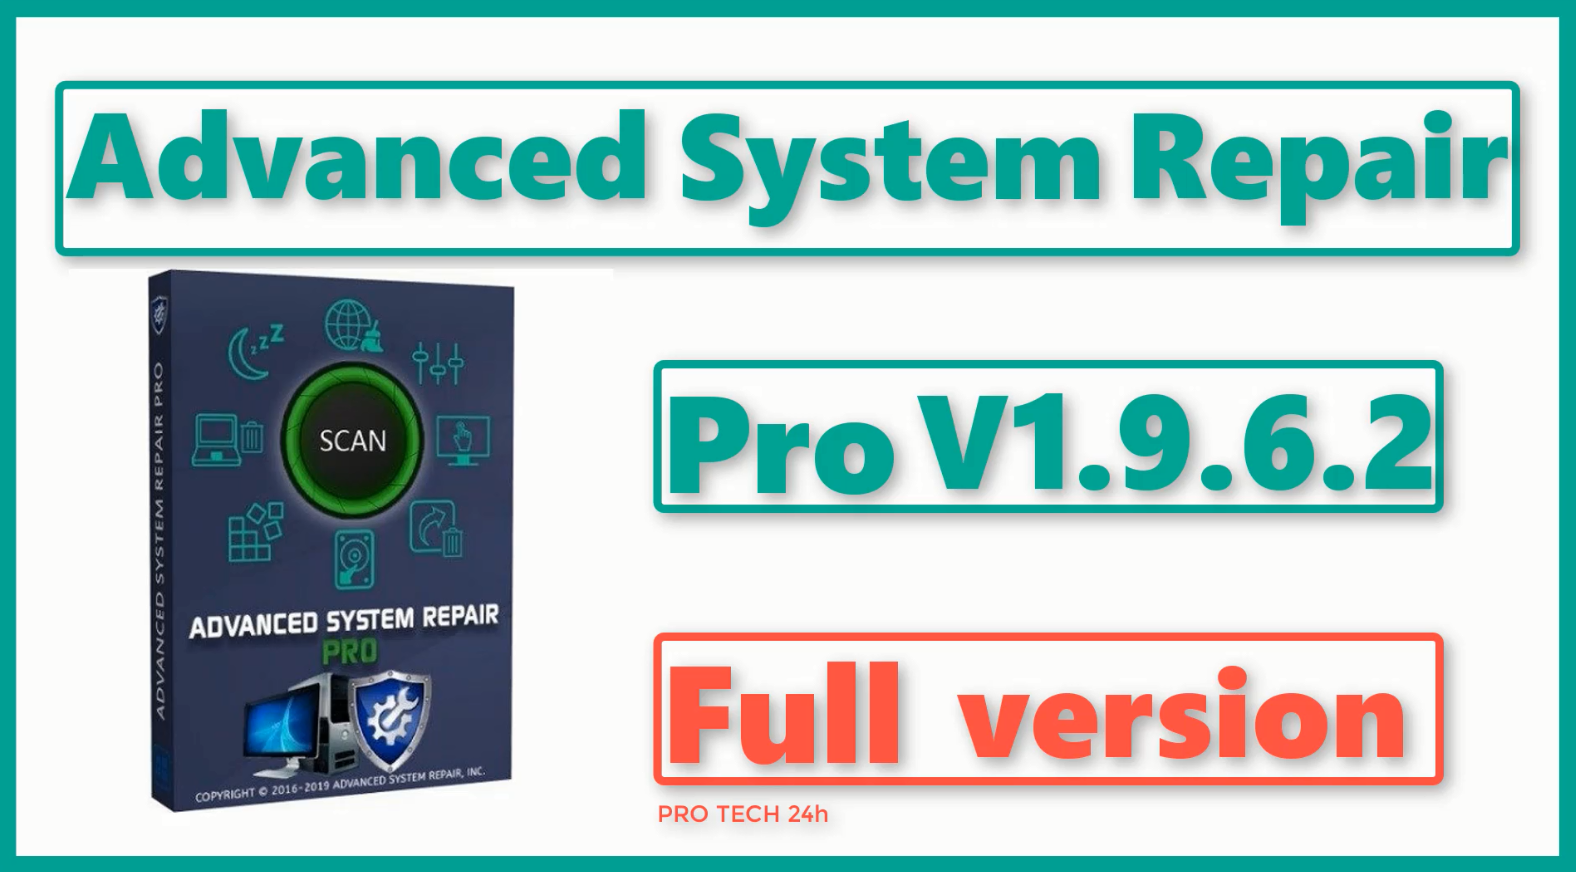 Advanced System Repair Pro version 1.9.6.2 Full version|NEW update